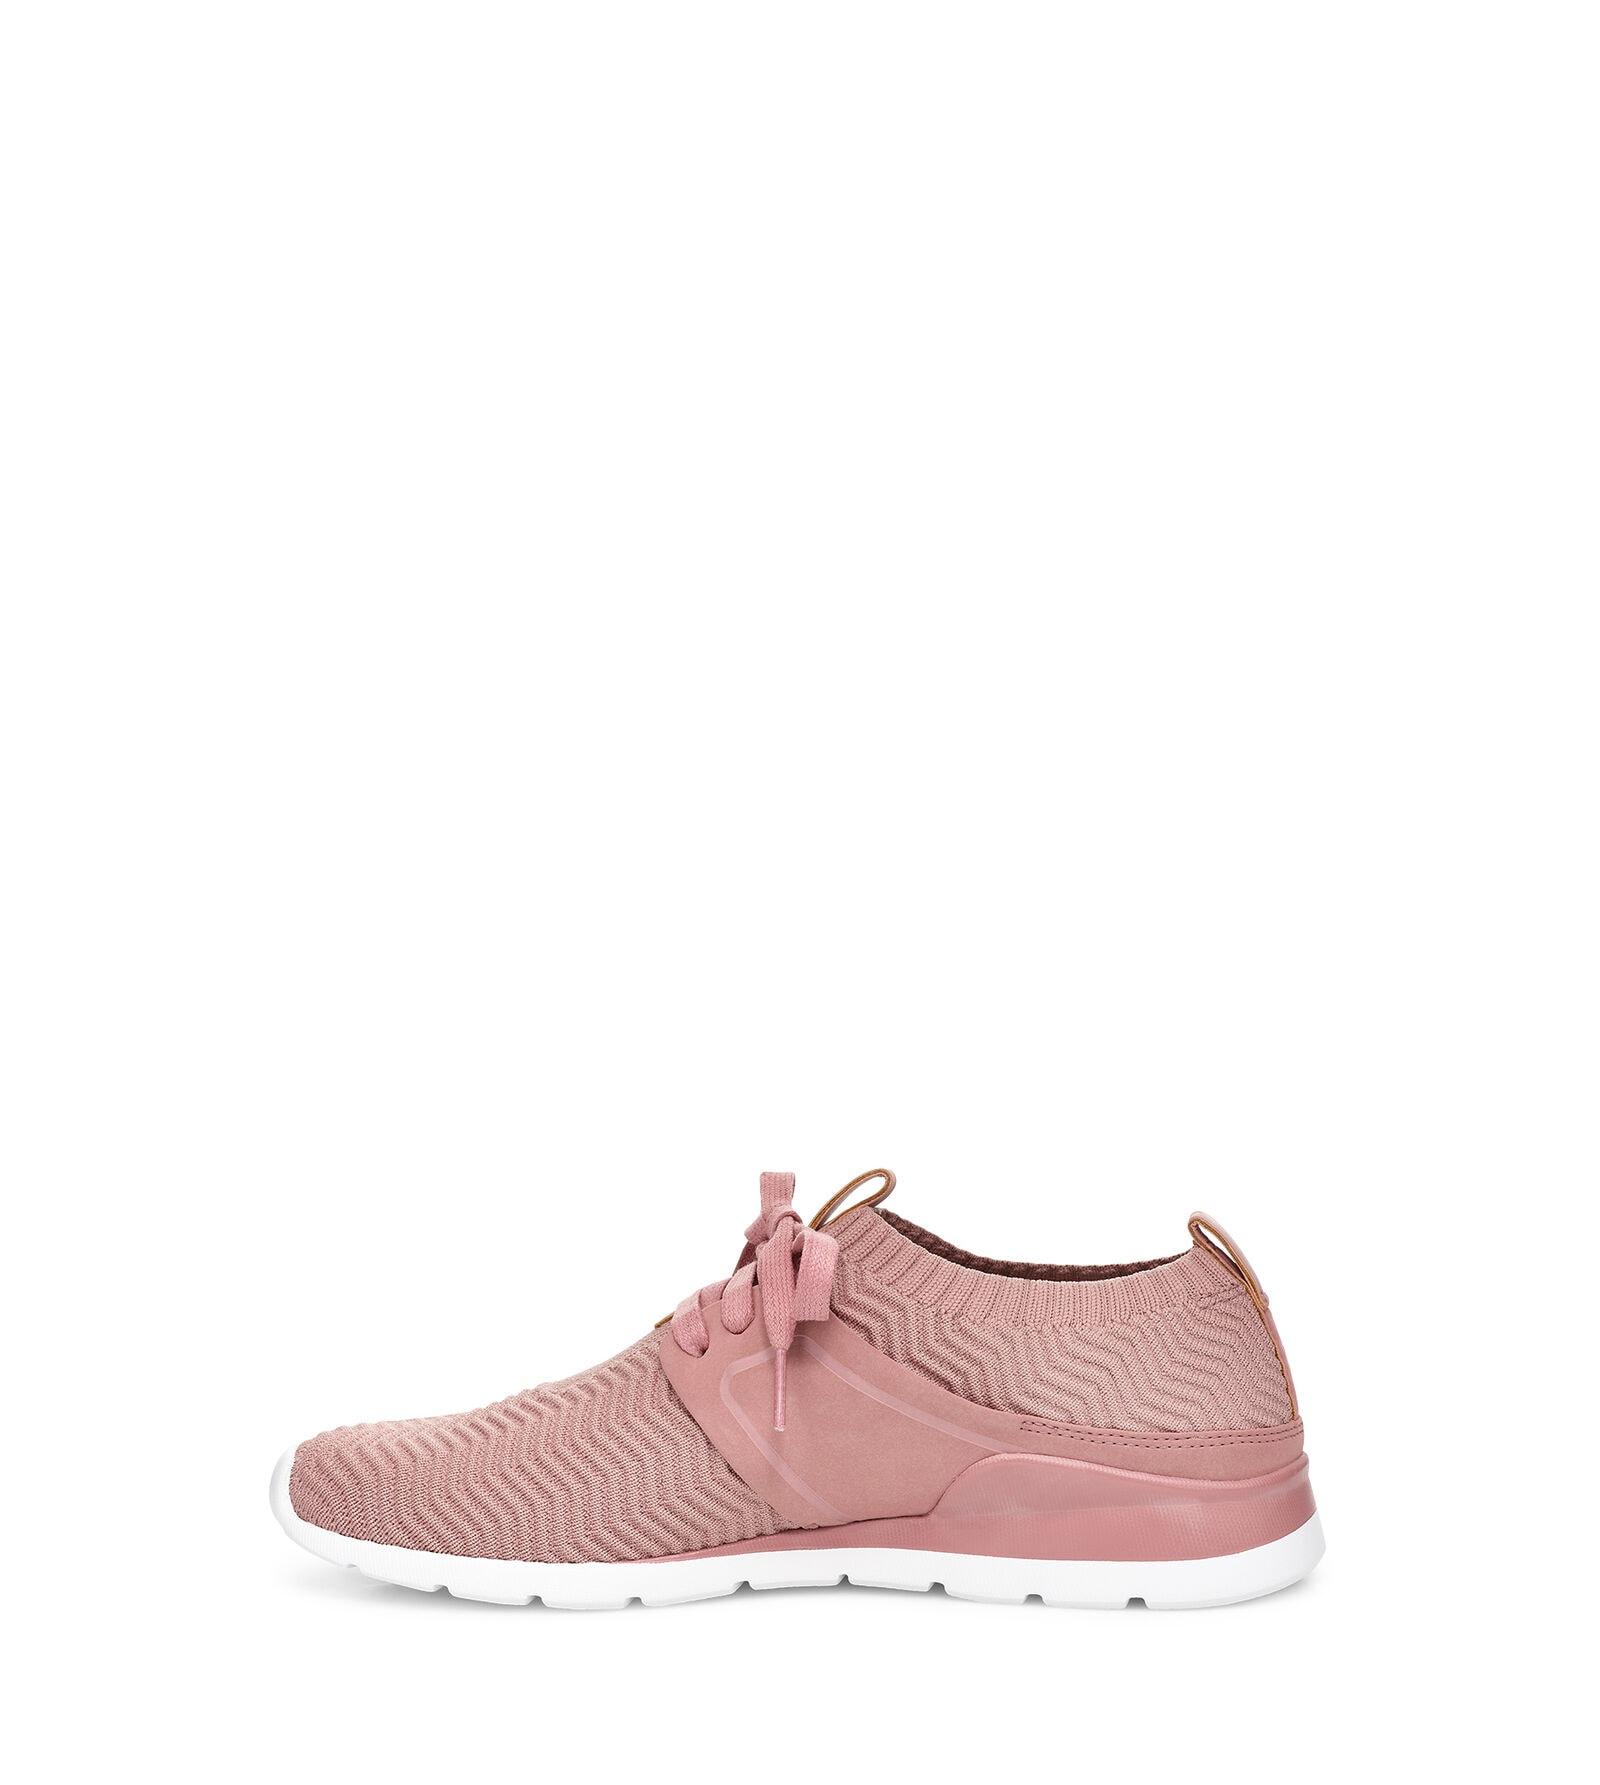 pink ugg tennis shoes